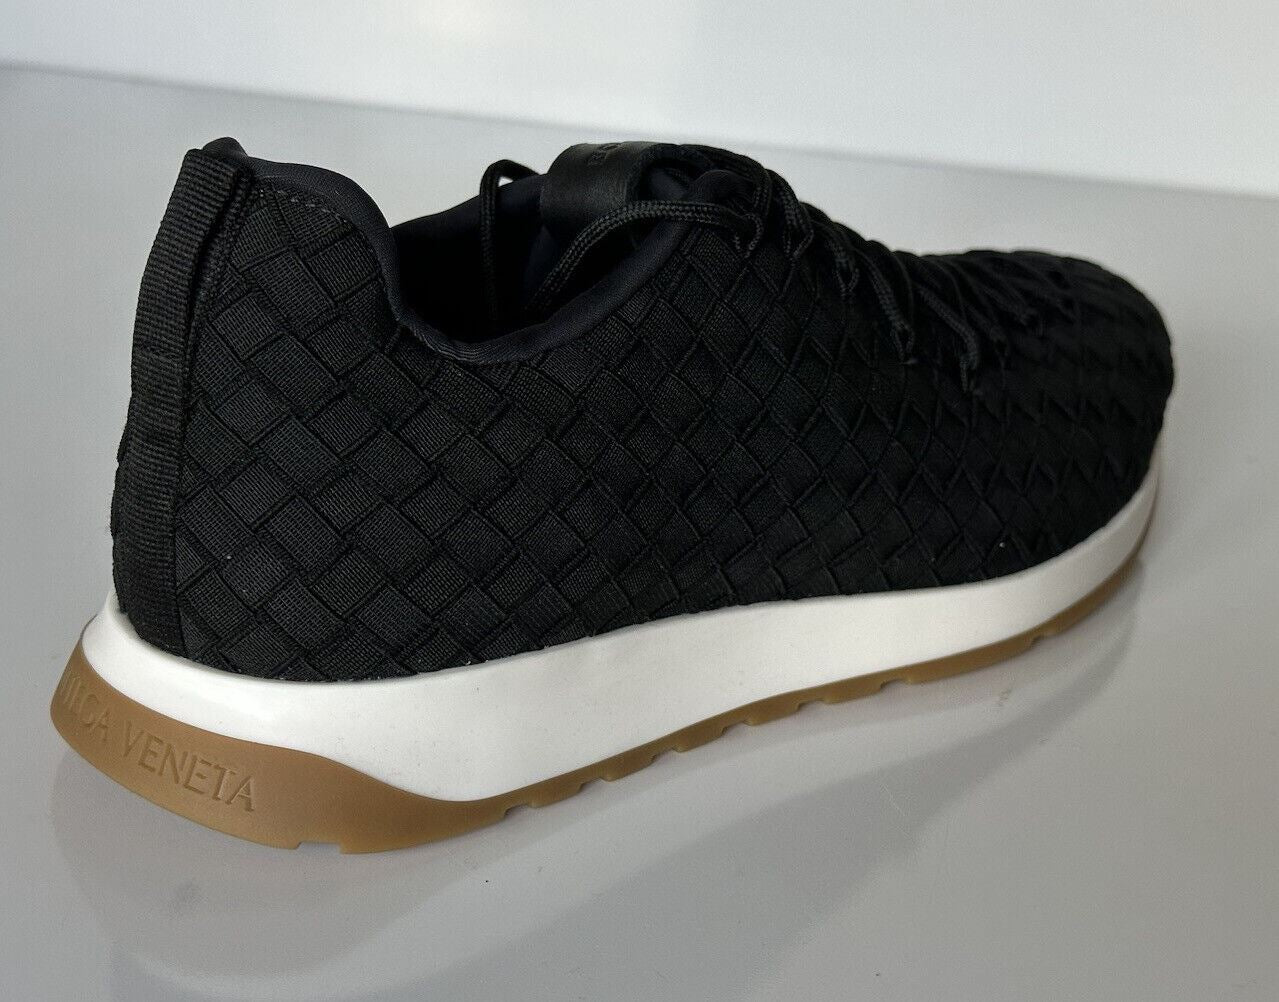 NIB $790 Bottega Veneta Men's Speedster Sneakers Black 10.5 US (43.5 Eu) 609915